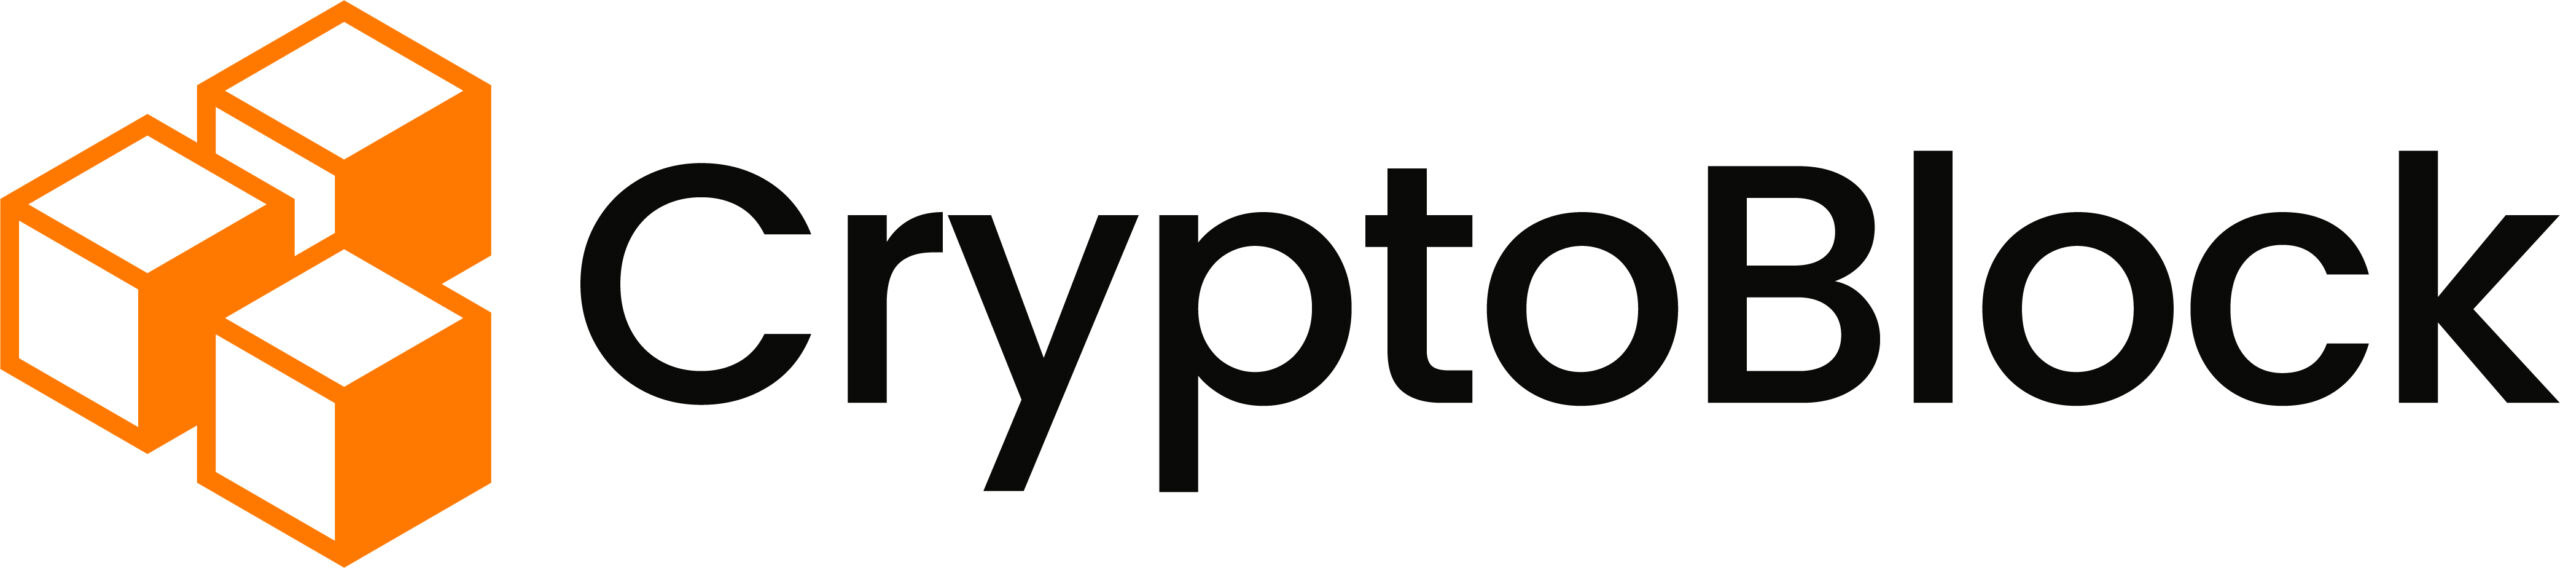 Cryptoblock.com